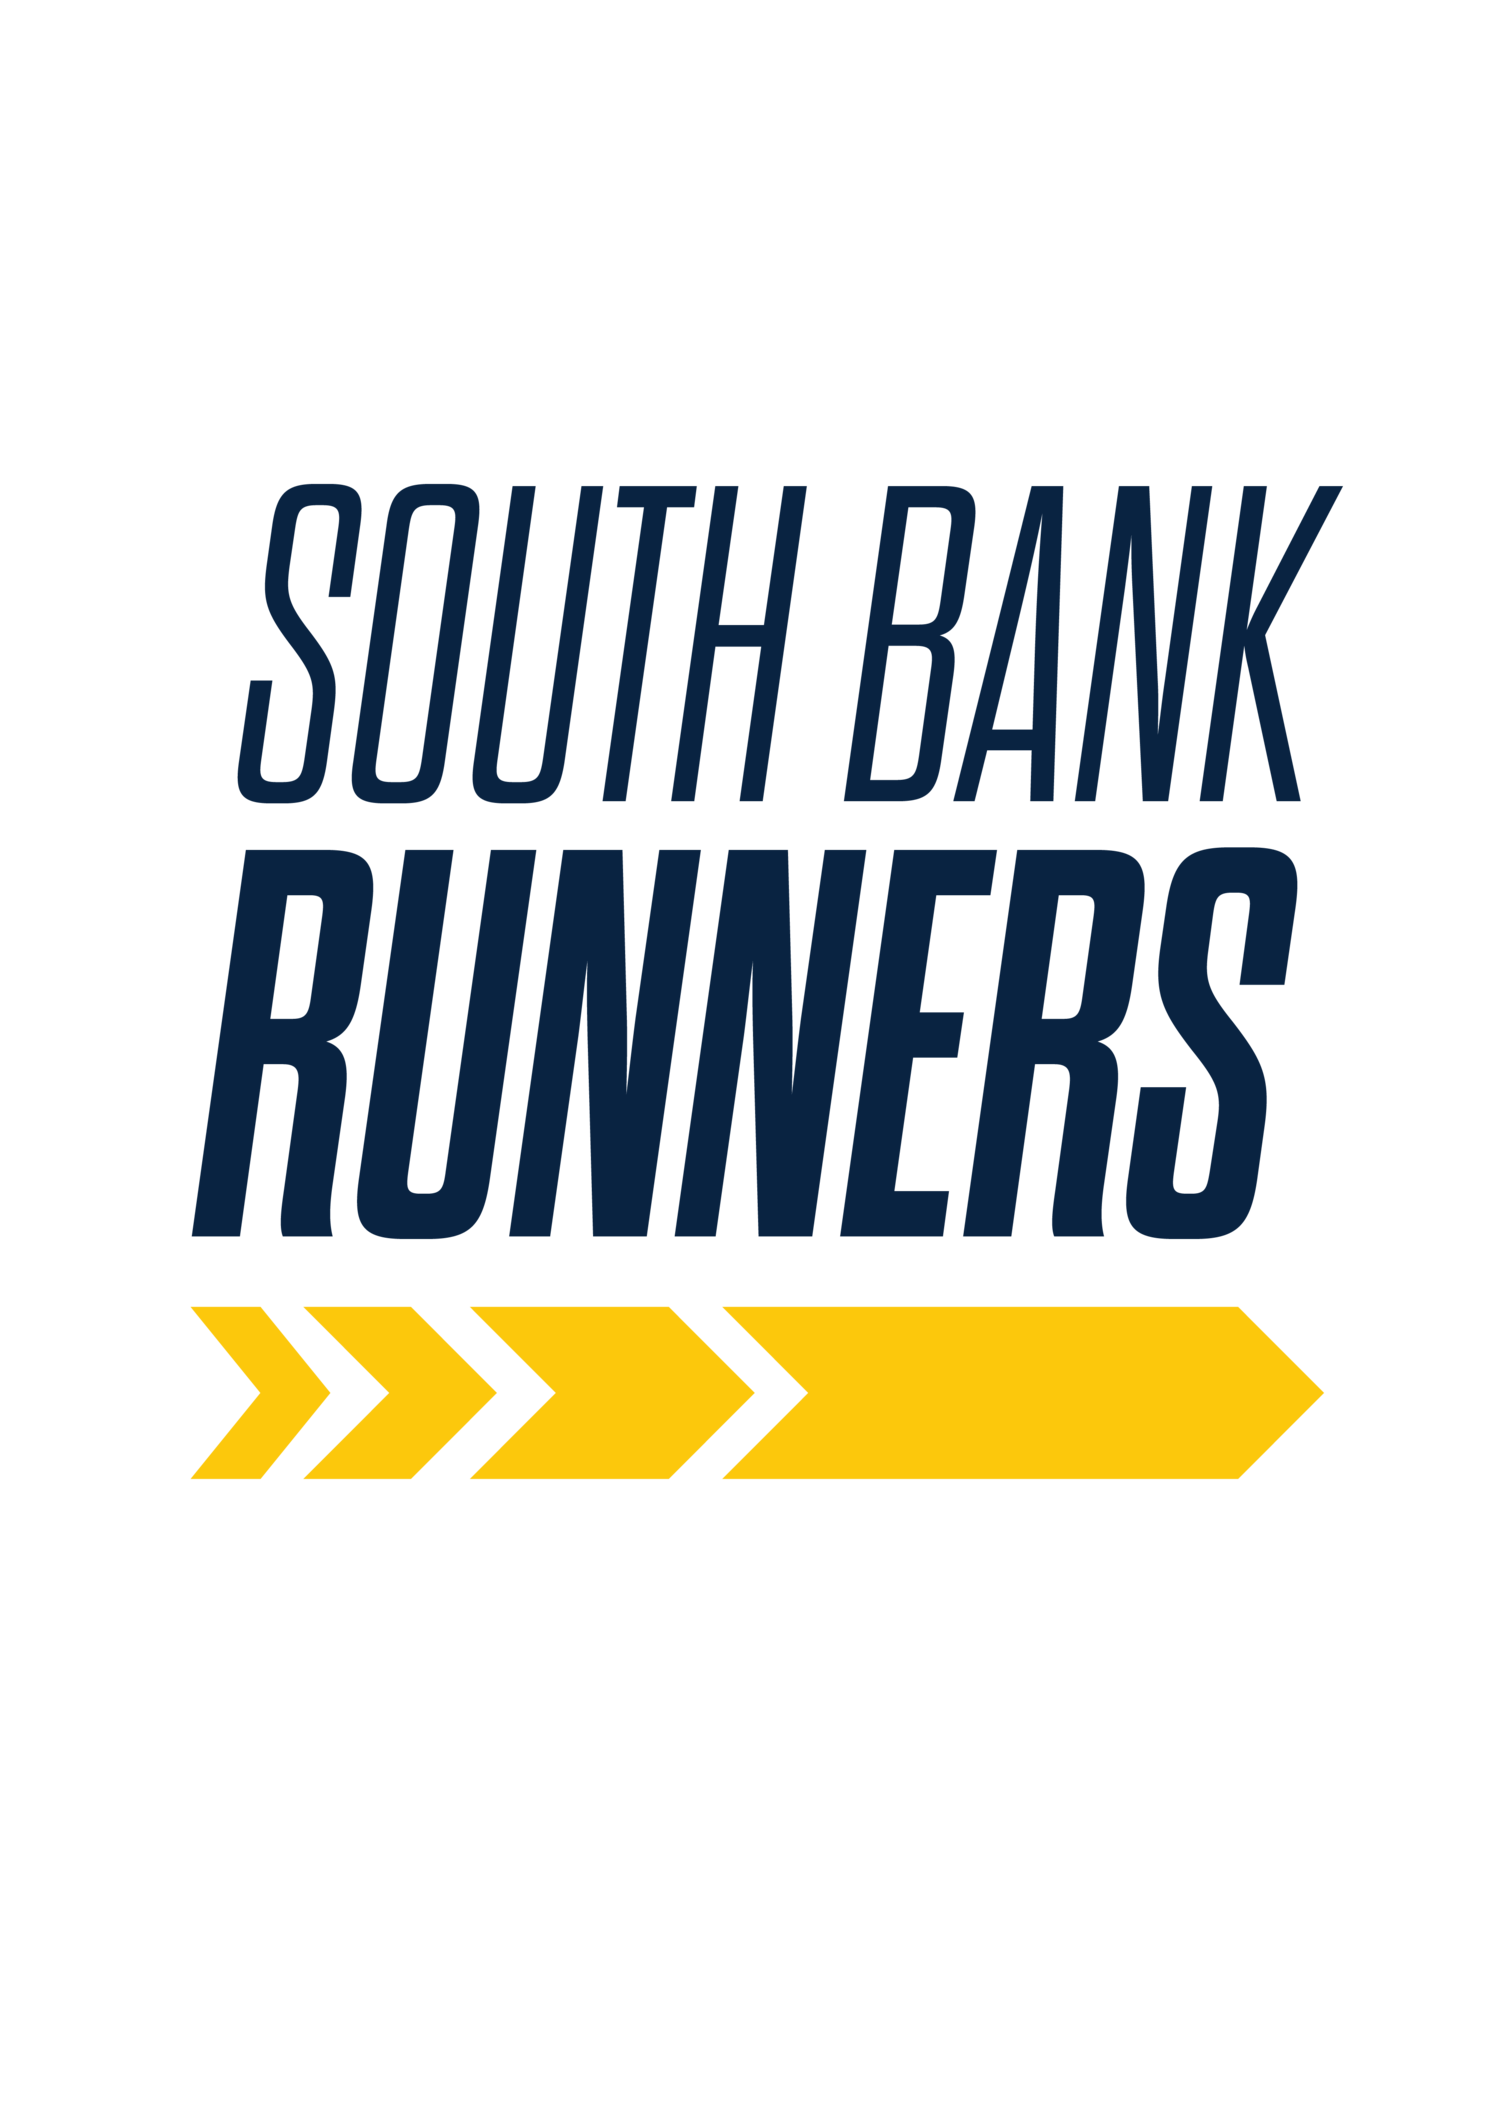 South Bank Runners: The Best Run Club in Brisbane!